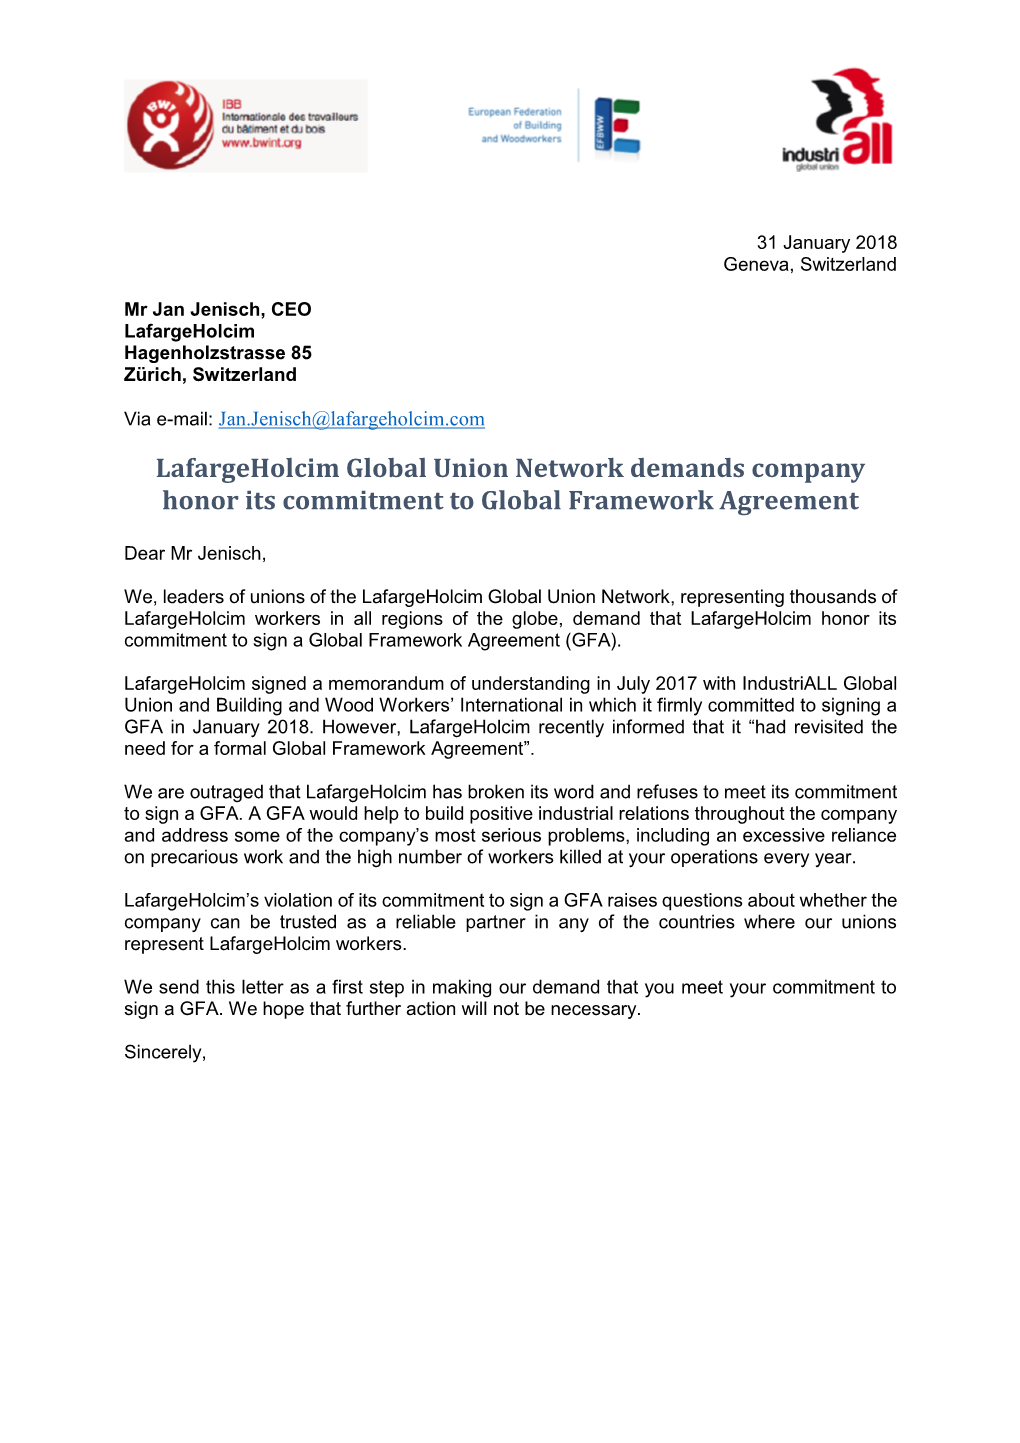 Lafargeholcim Global Union Network Demands Company Honor Its Commitment to Global Framework Agreement